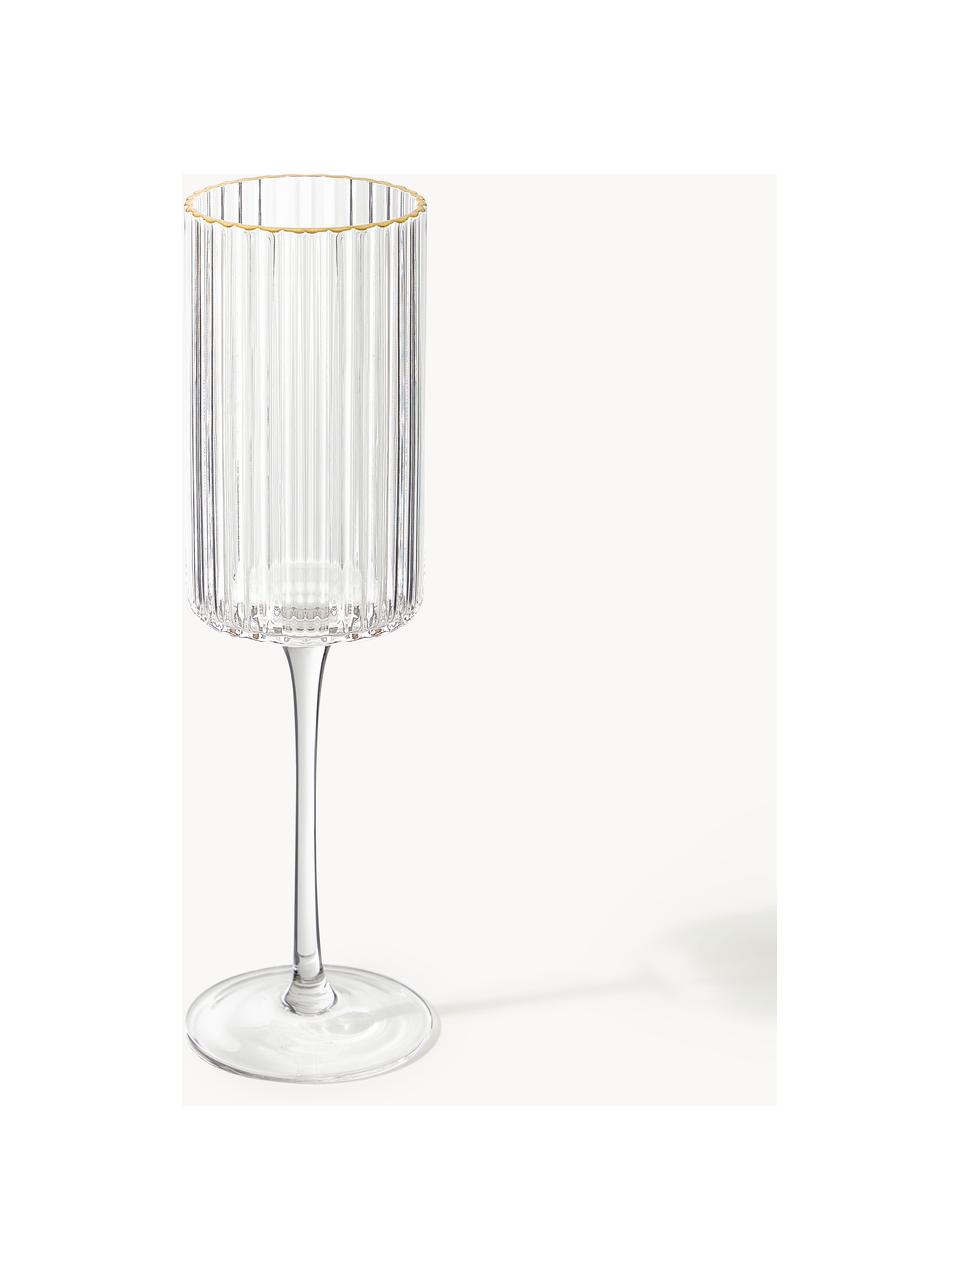 Mondgeblazen champagneglazen Aleo met goudkleurige rand, 4 stuks, Glas, Transparant met goudkleurige rand, Ø 7 x H 23 cm, 240 ml